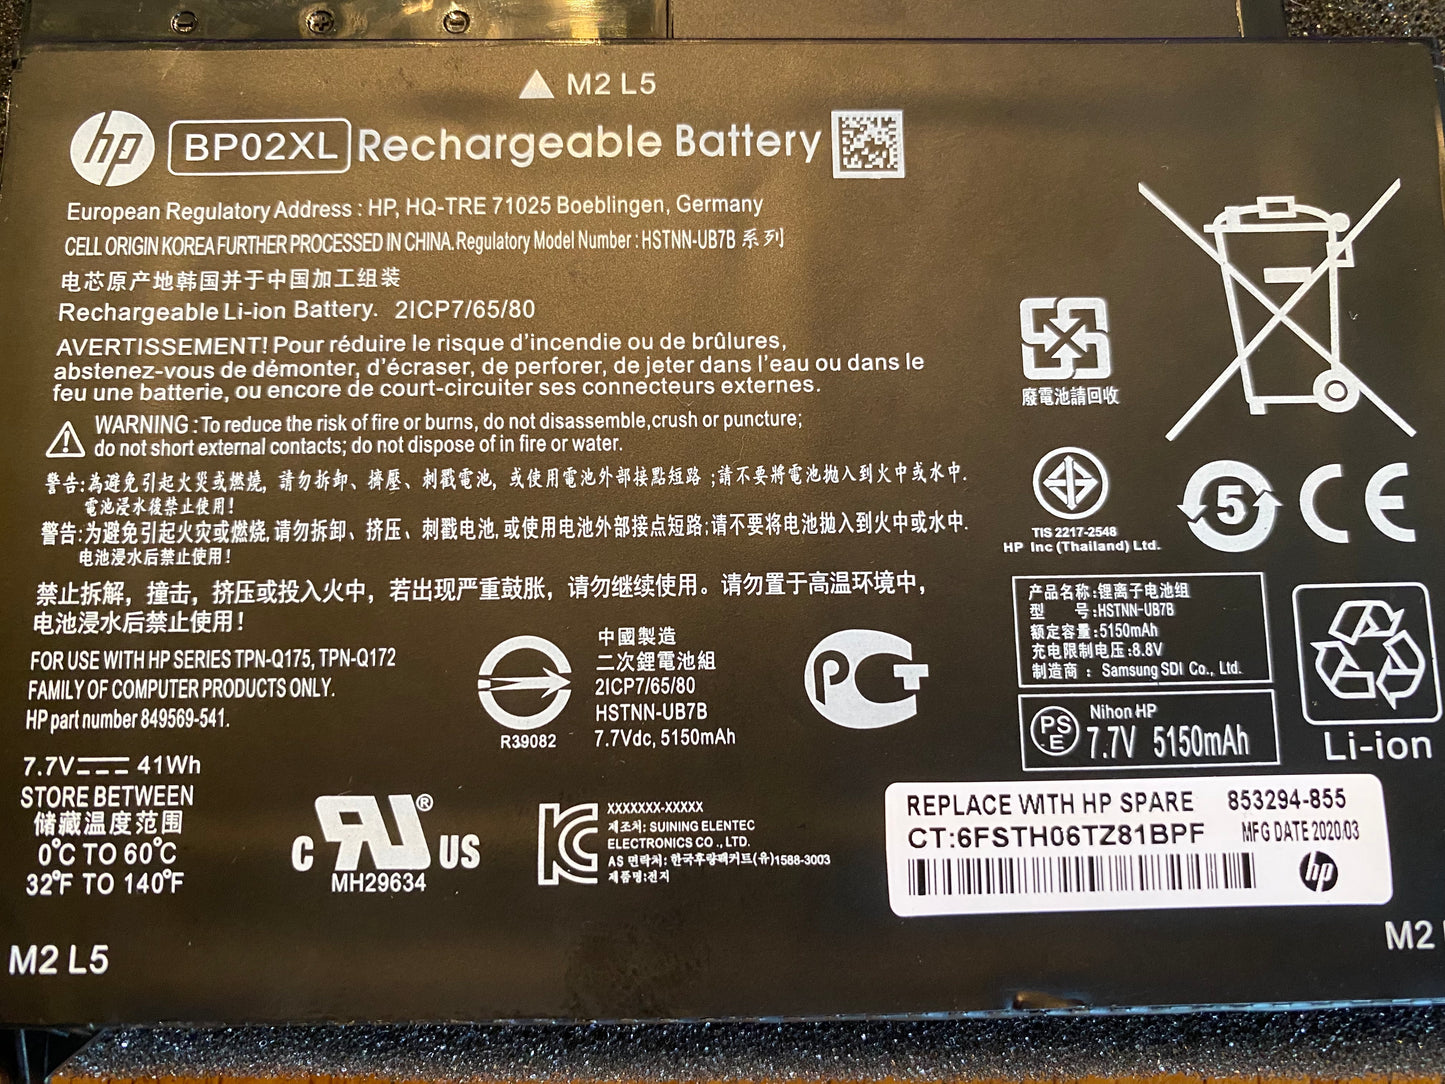 HP BP02XL 849909-850 Laptop Battery for HP Pavilion PC - New - Open Box